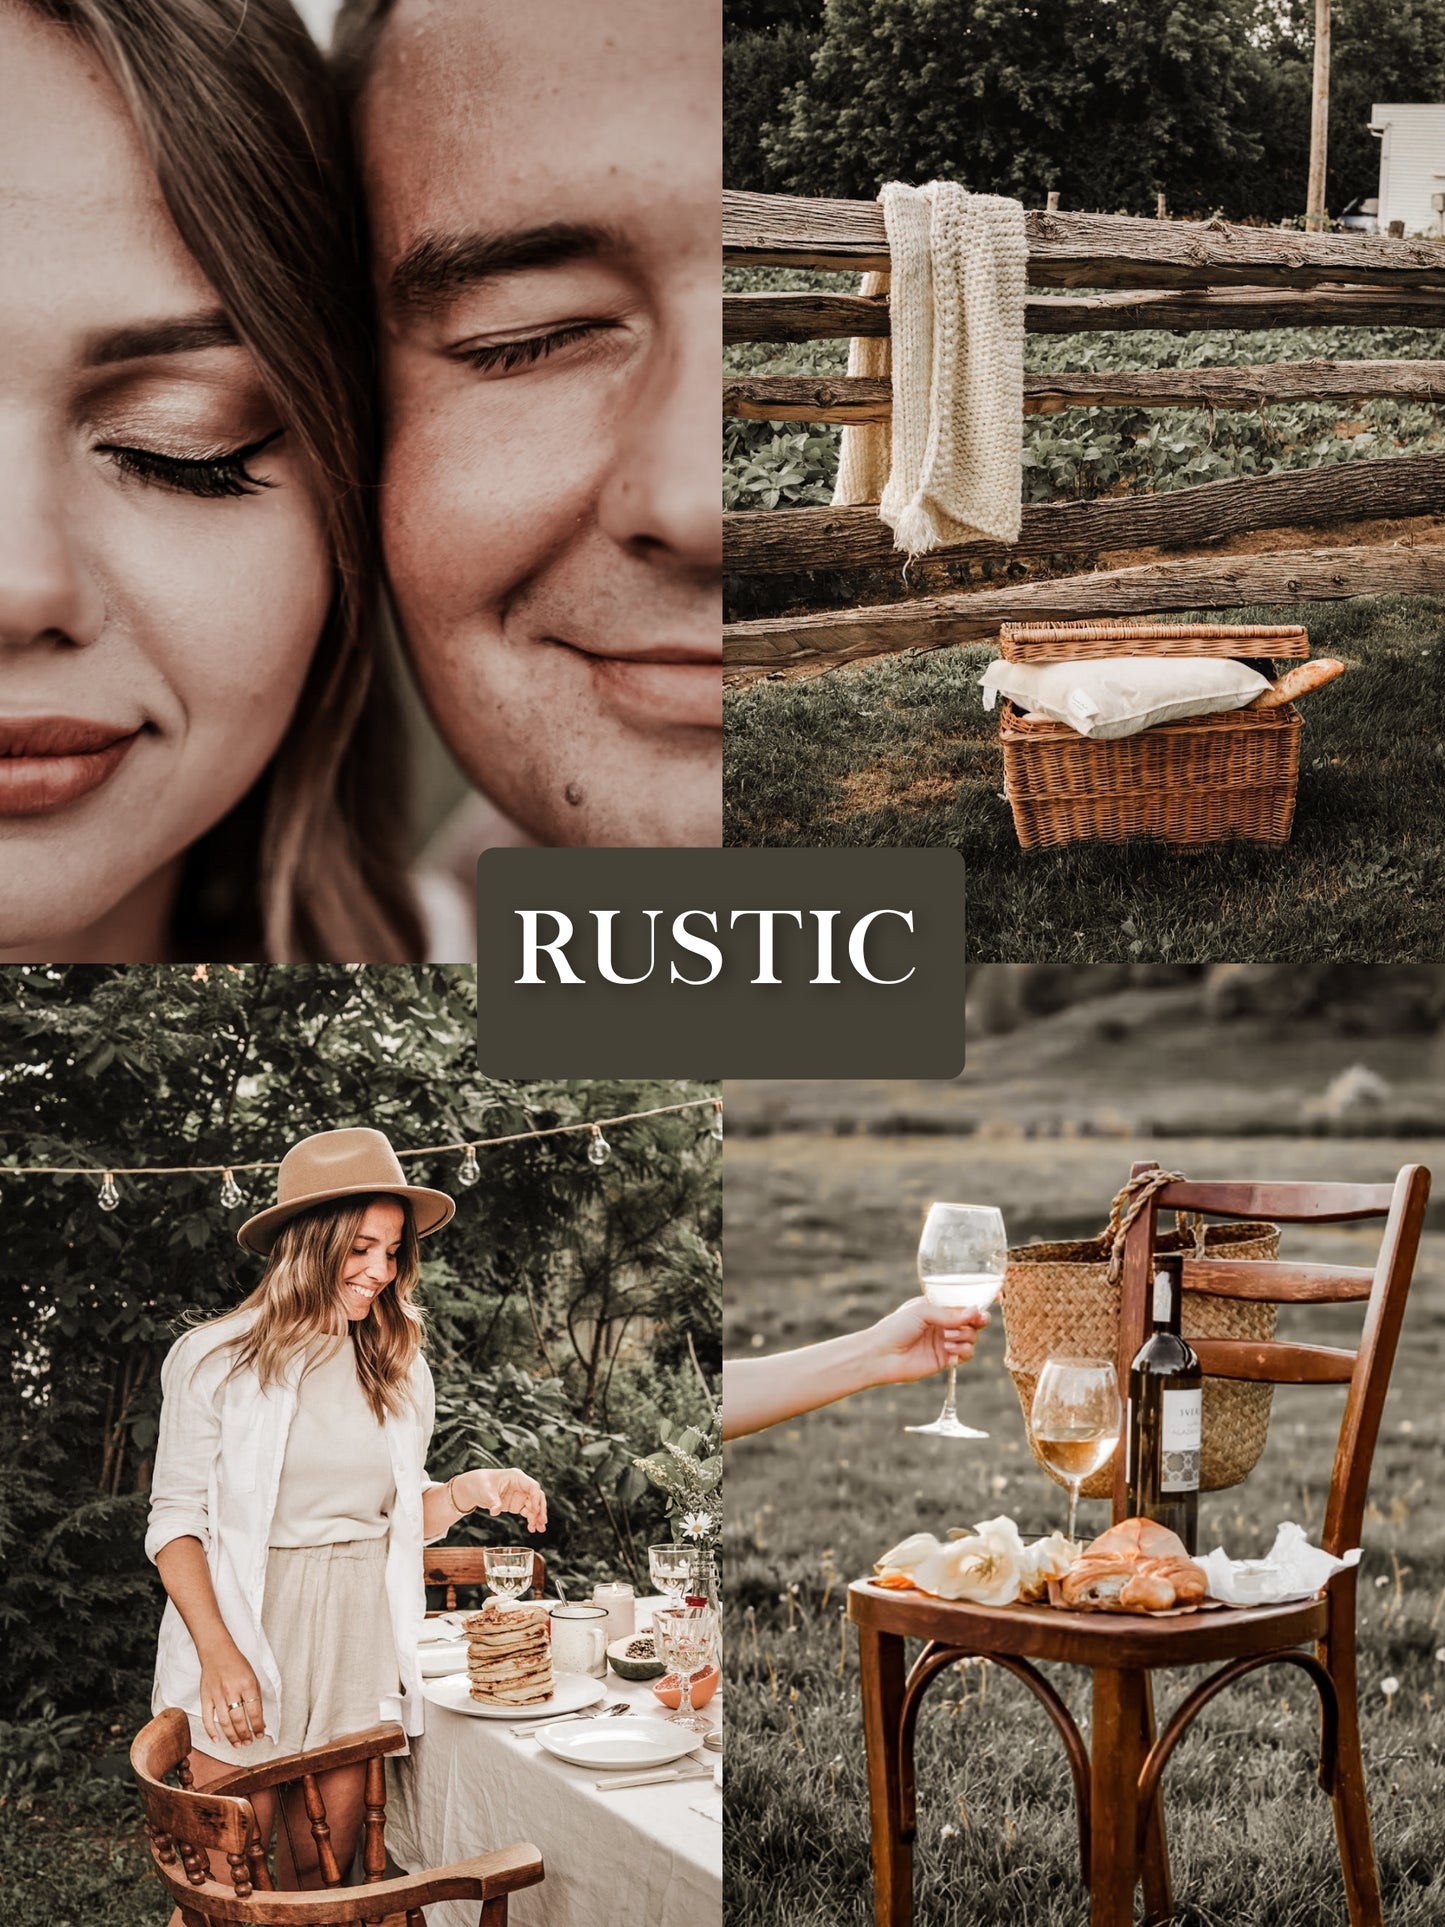 Rustic (Mobile + Desktop) - One Click Filter